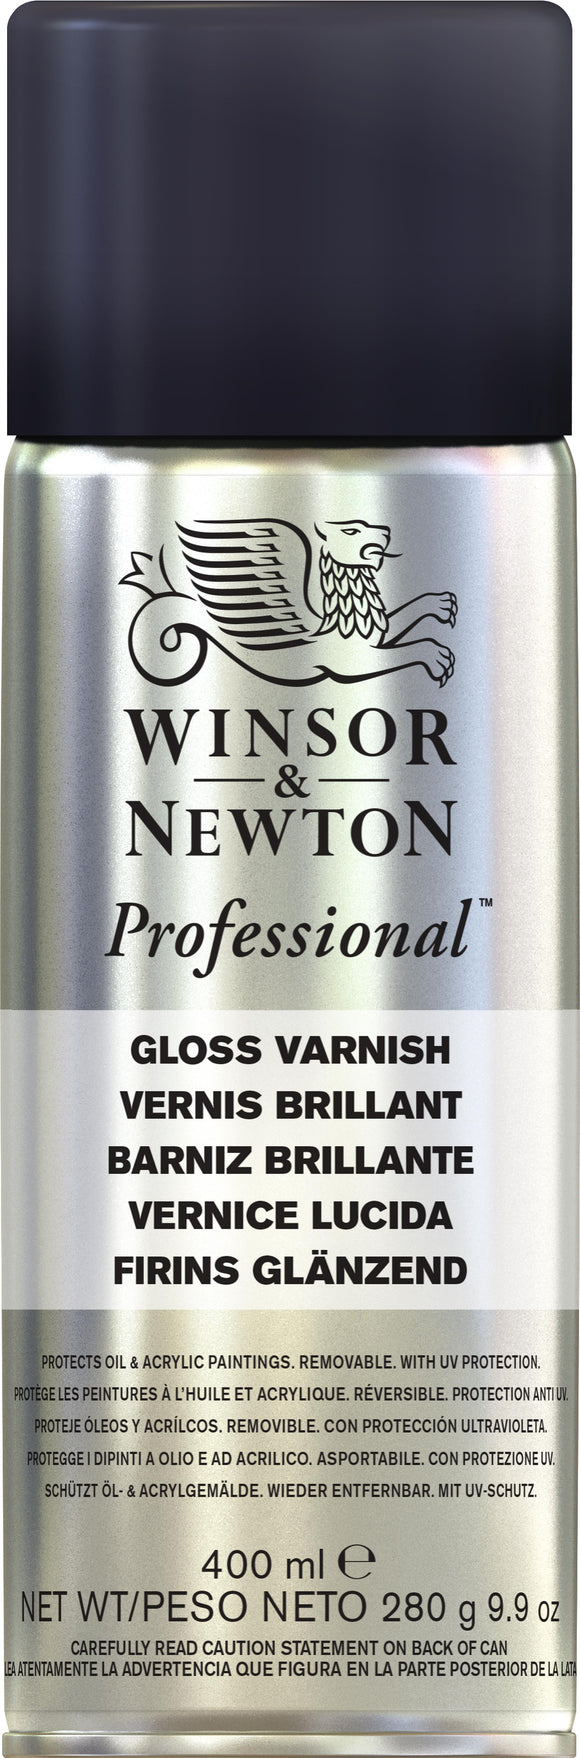 Winsor & Newton Professional Gloss Varnish Spray 400M